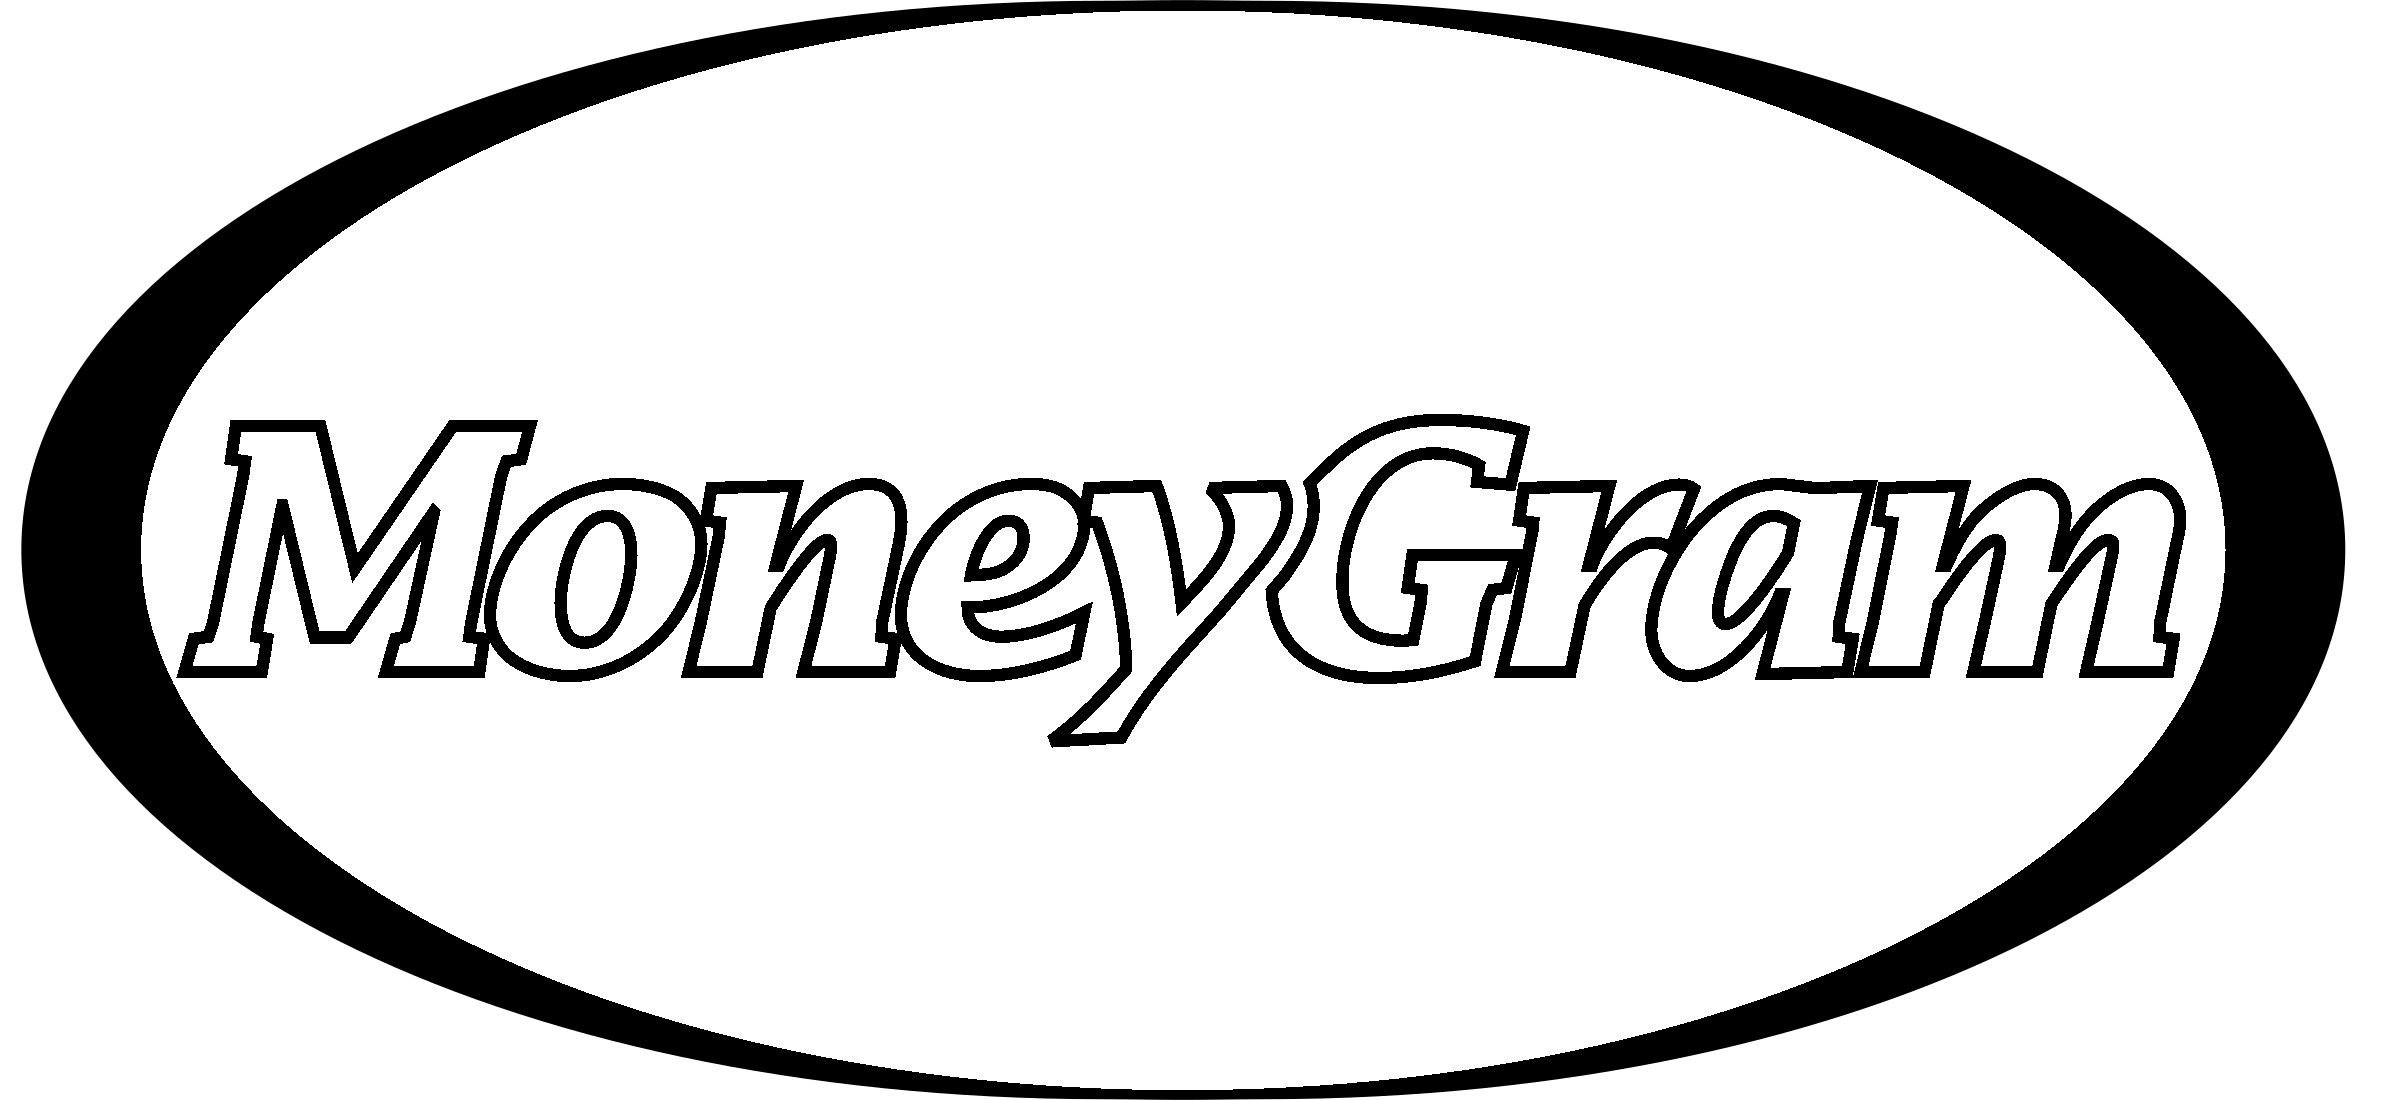 MoneyGram Logo - MoneyGram Logo PNG Transparent & SVG Vector